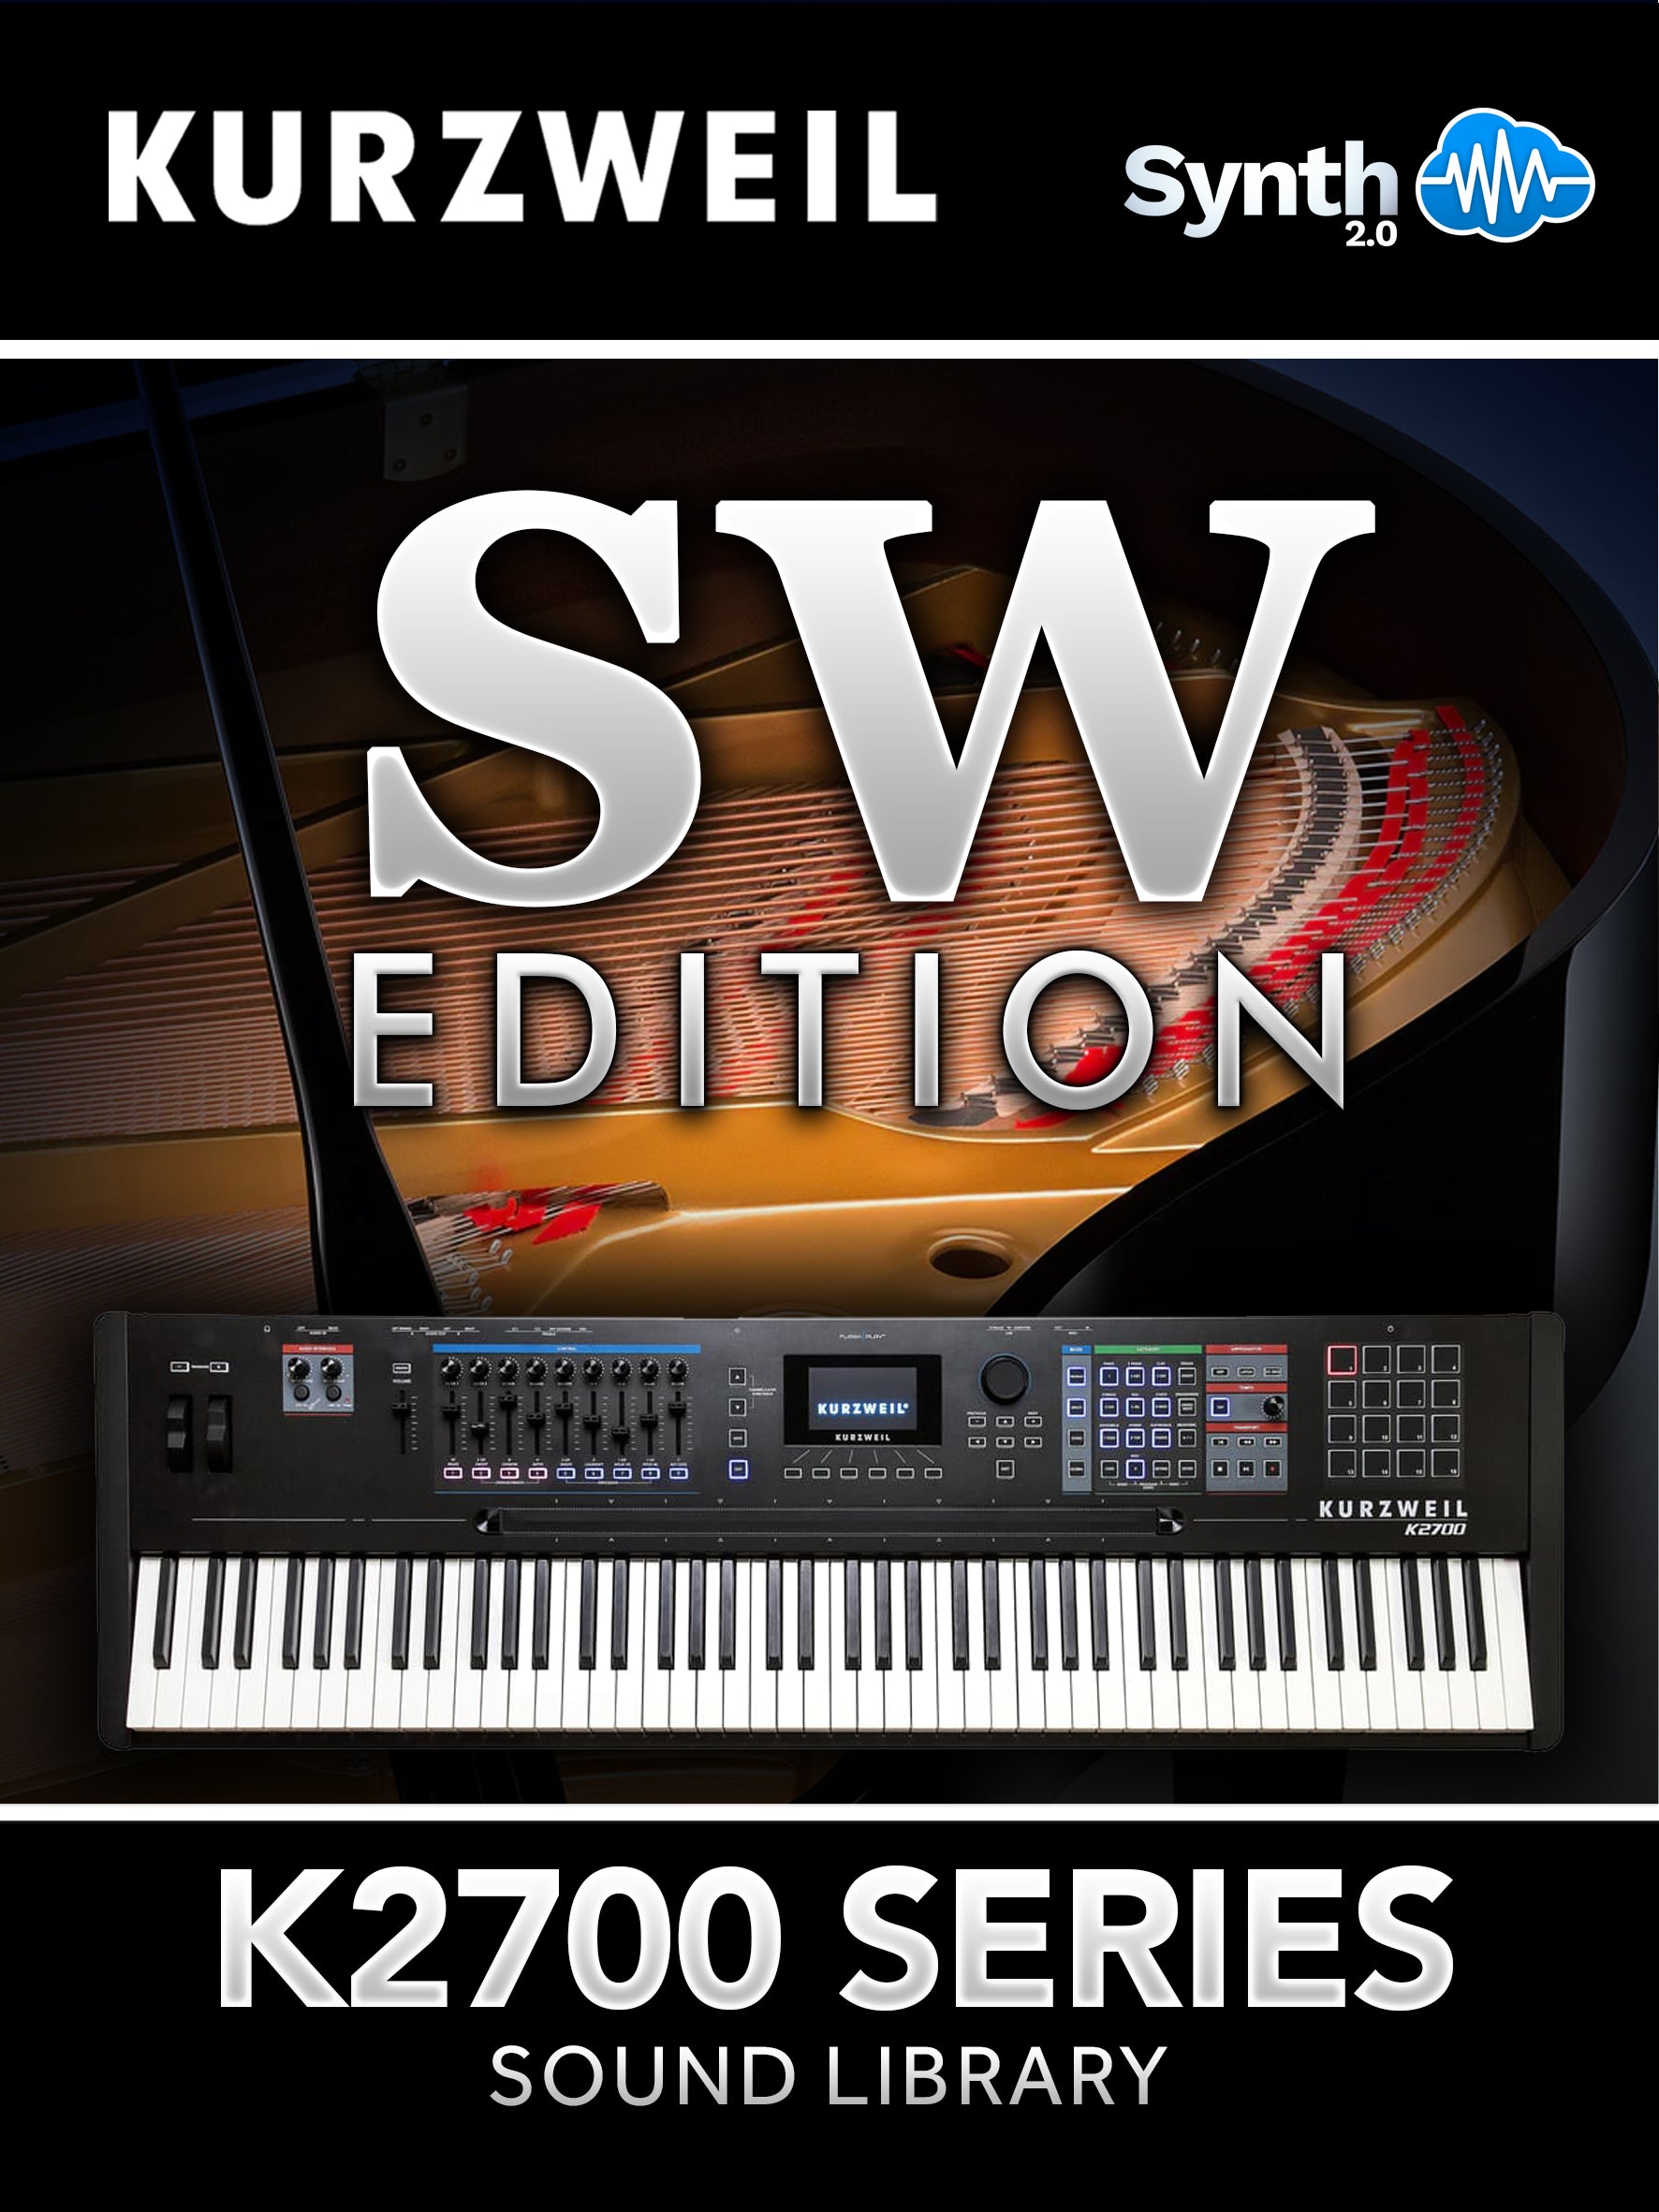 DRS006 - Contemporary Pianos SW Edition - Kurzweil K2700 ( 4 presets )